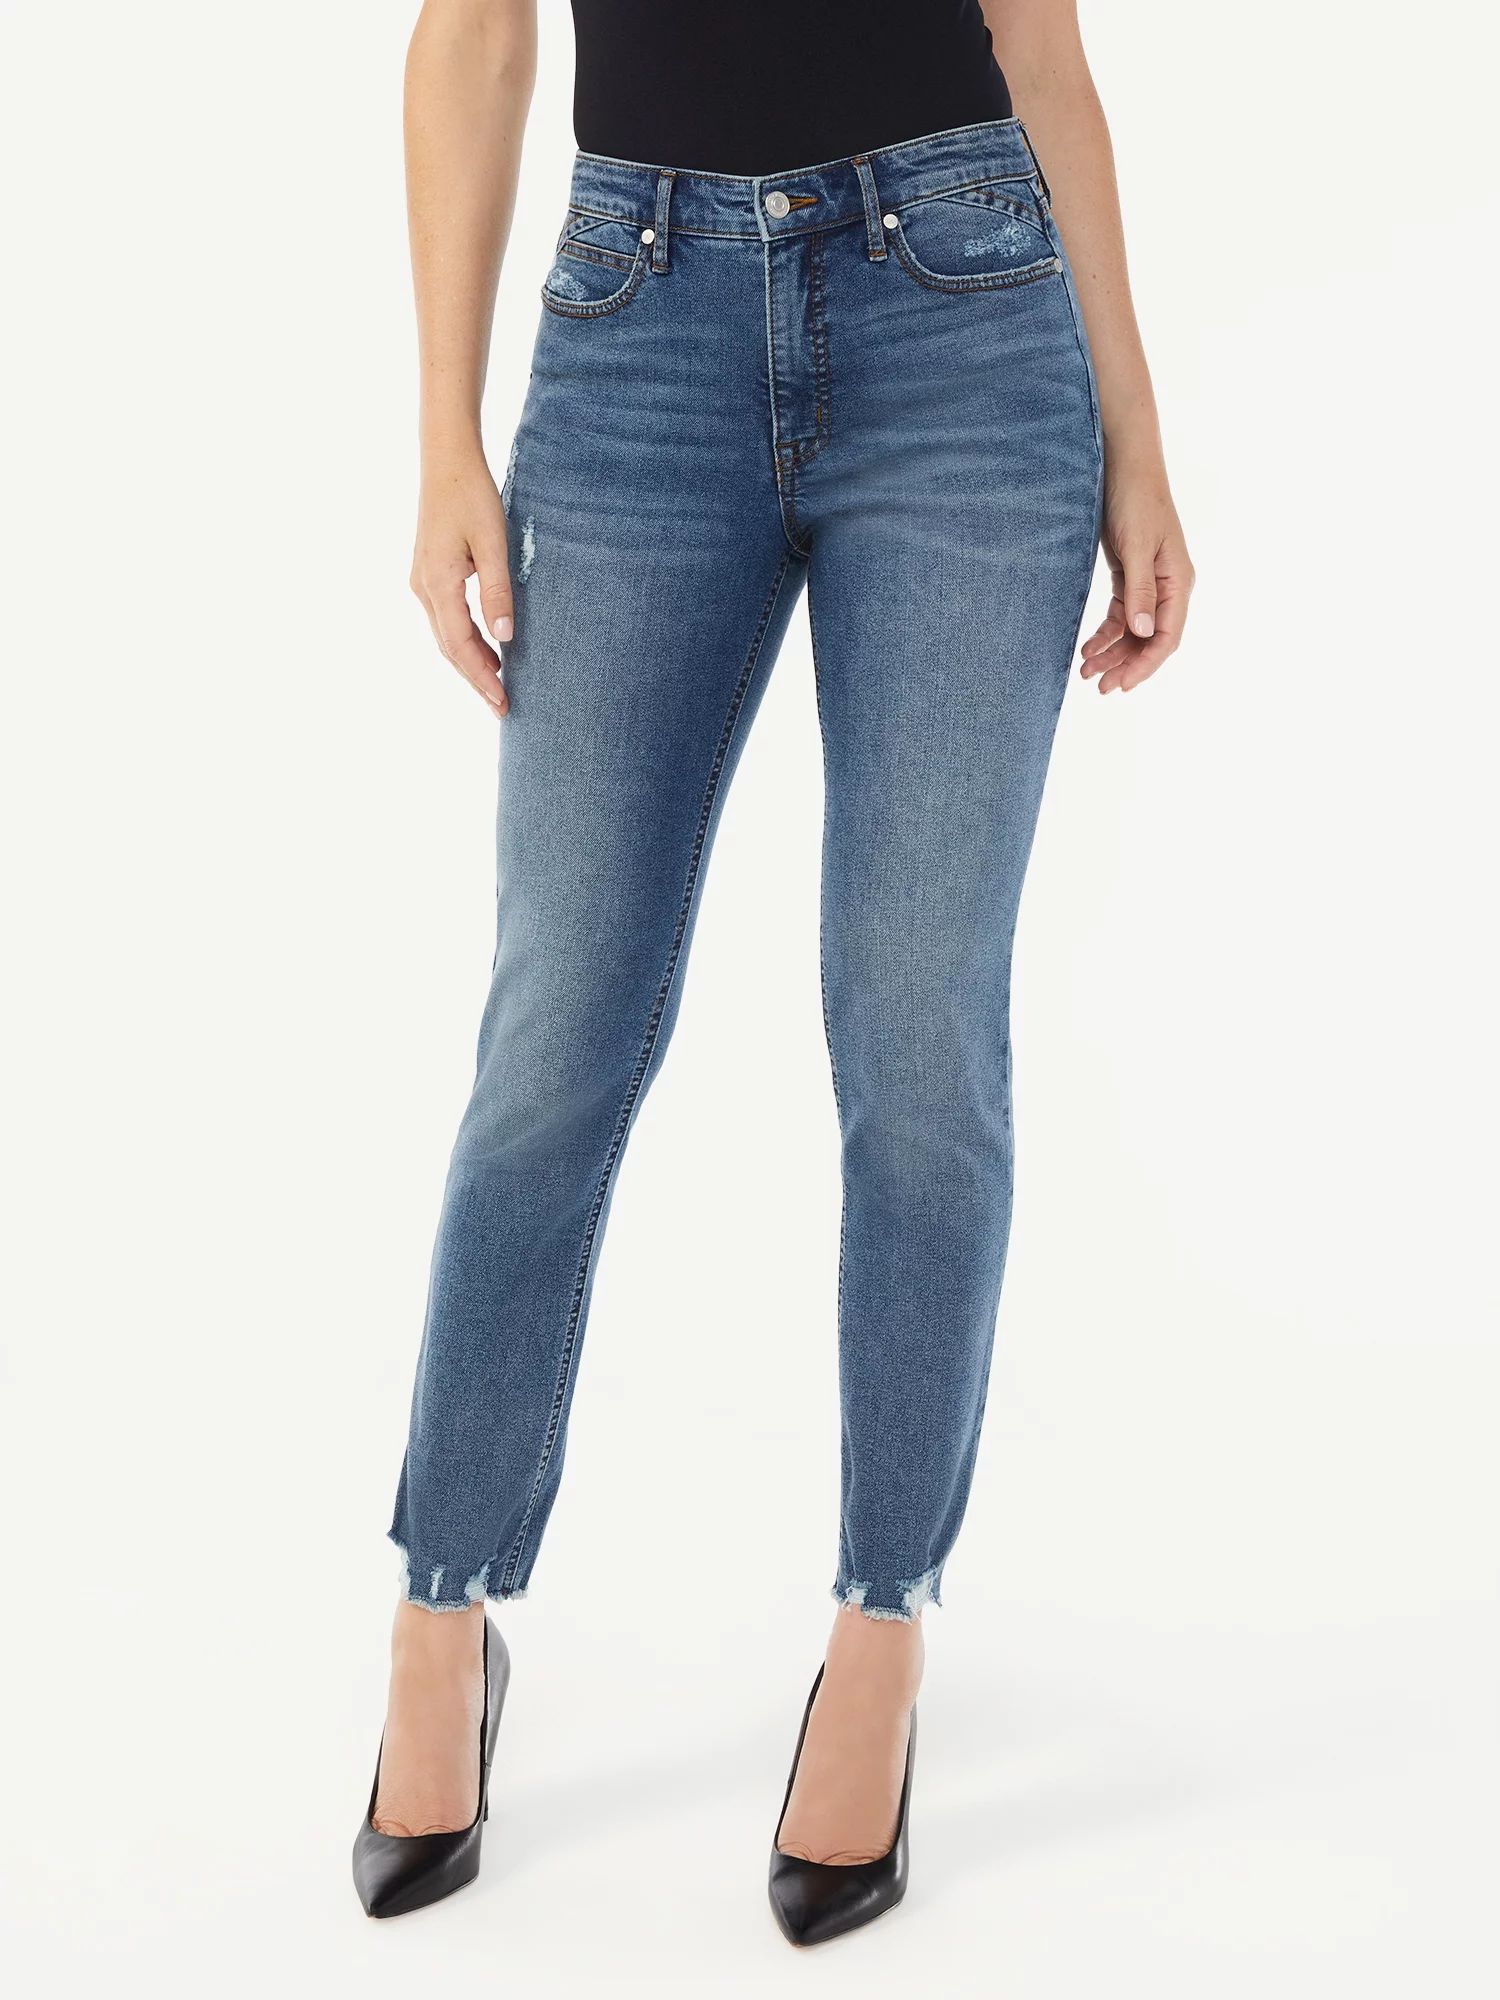 Sofia Jeans by Sofia Vergara Women's Adora High Rise Curvy Girlfriend Jeans | Walmart (US)